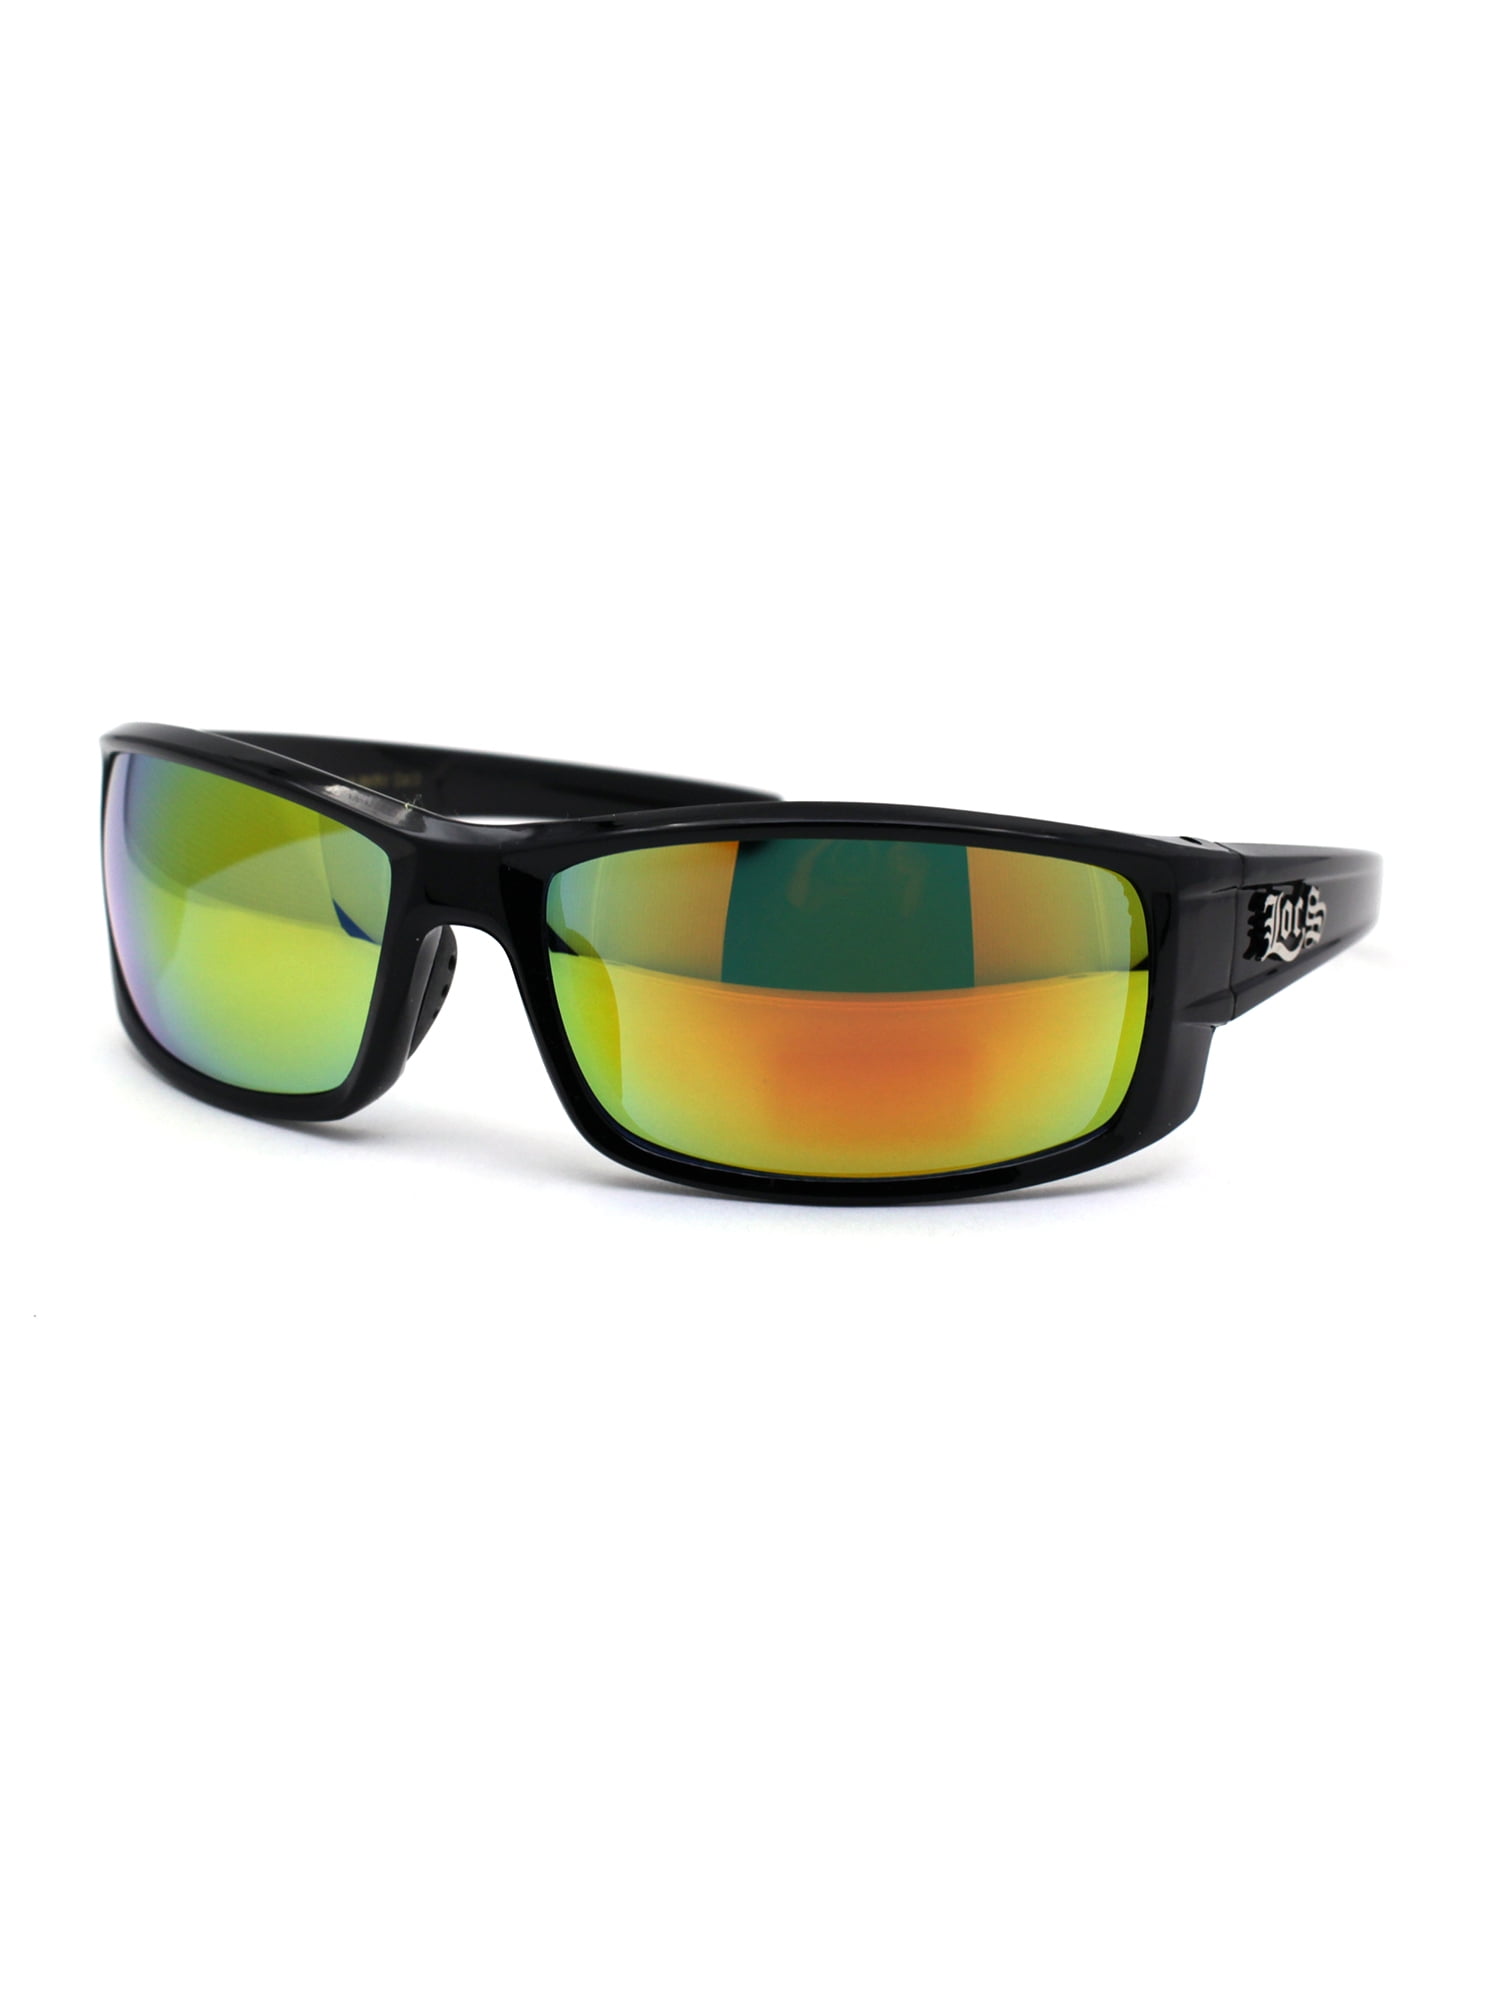 Locs Mens Gangsta Shades Sunglasses New 5209B - Walmart.com